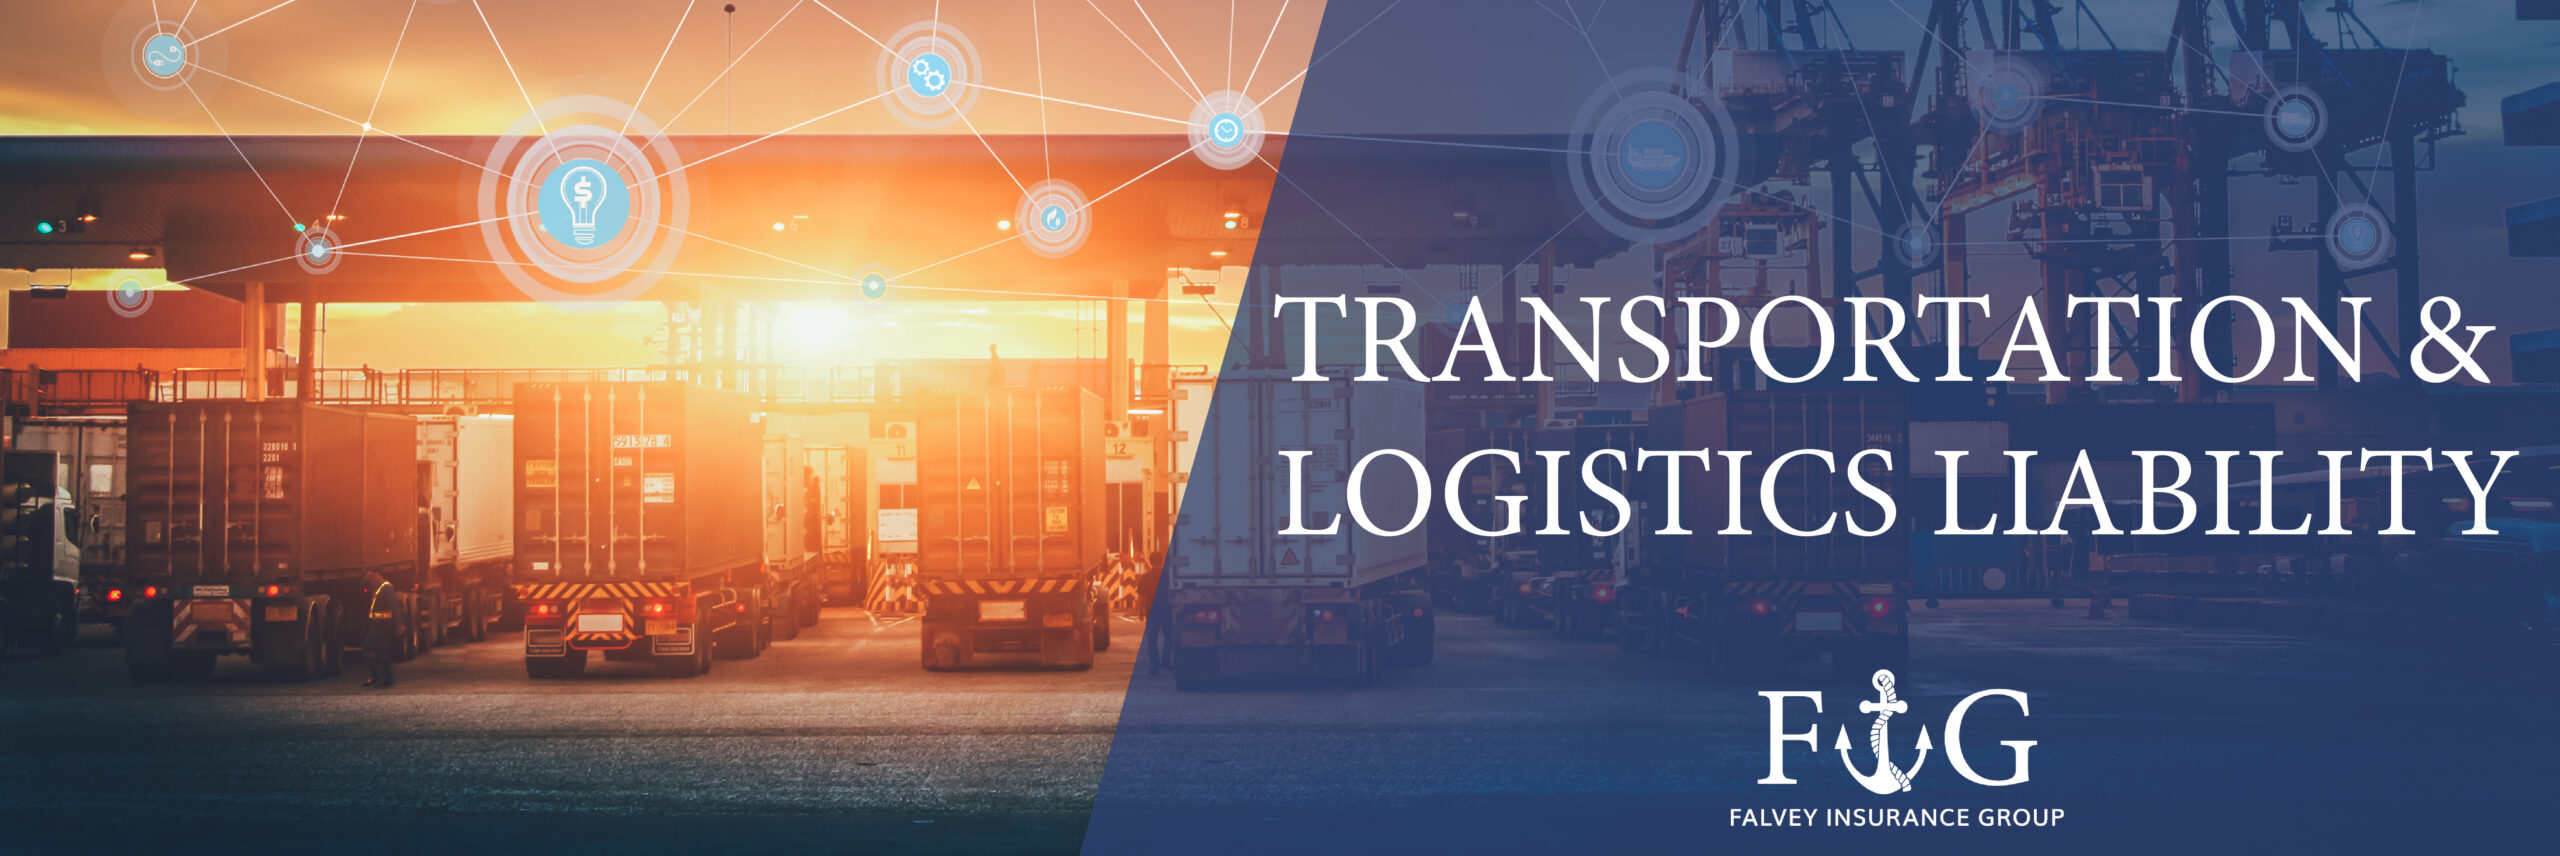 transportation and logistics liability banner